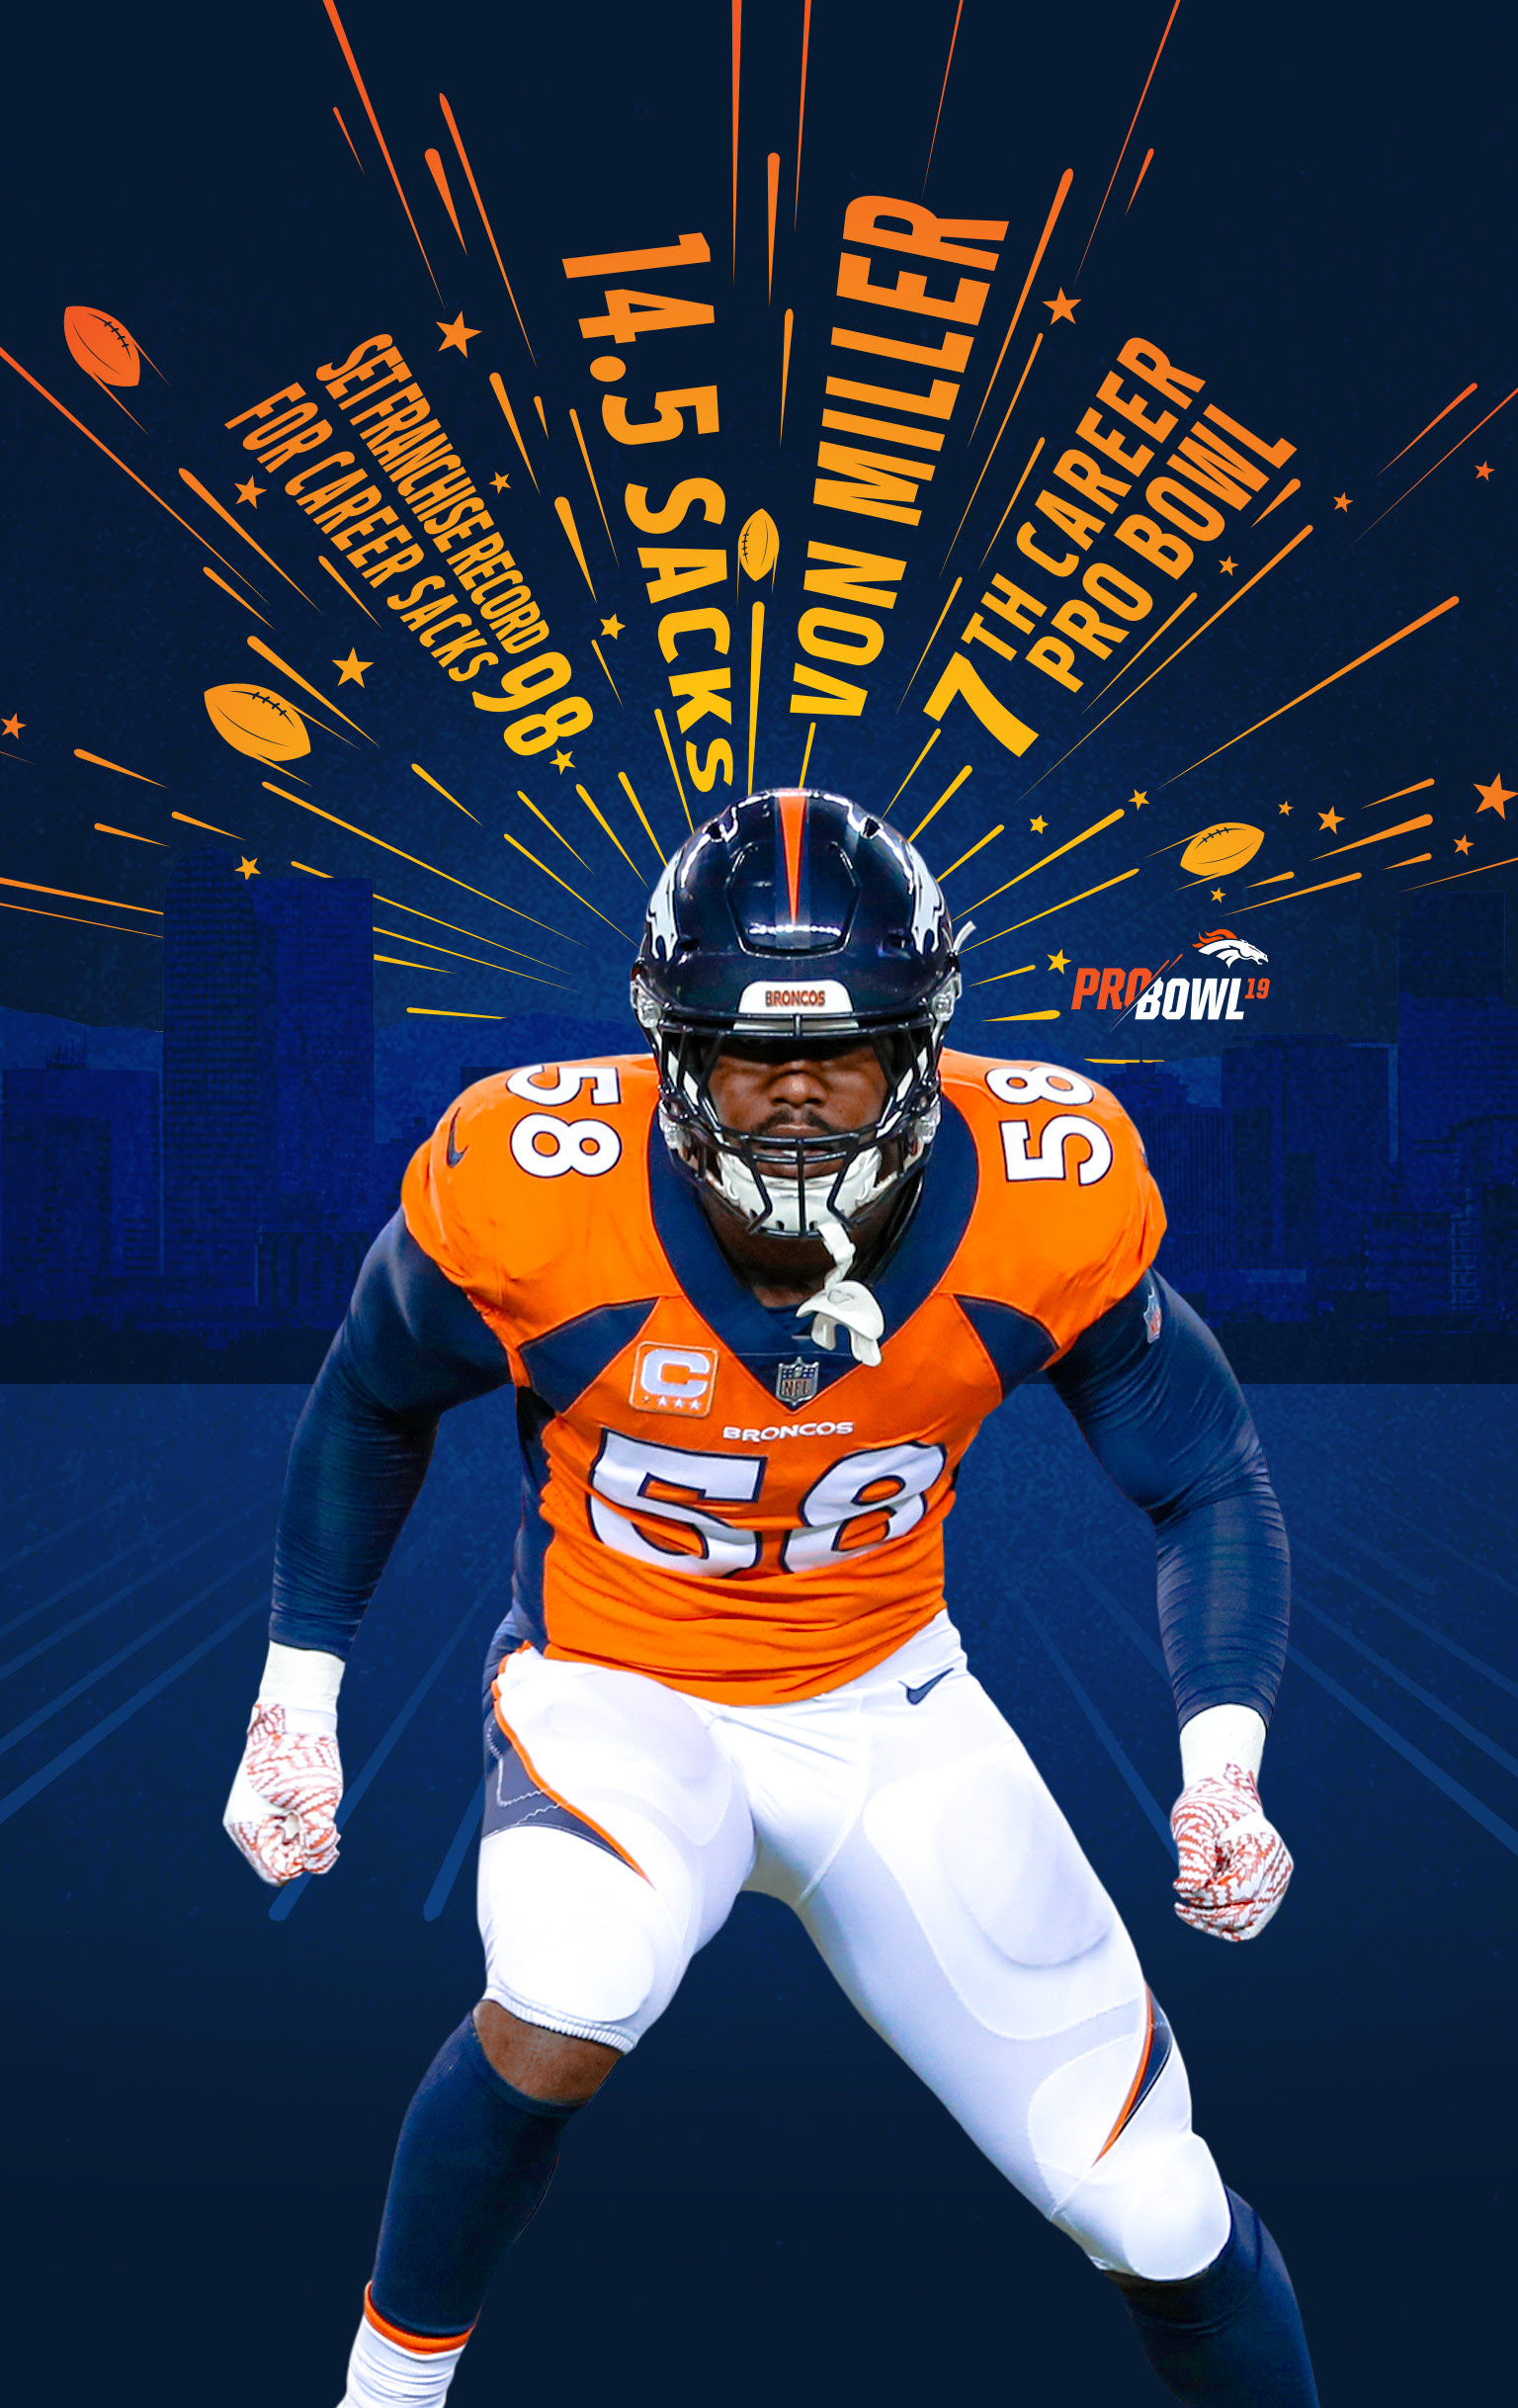 Denver Broncos HD Wallpapers (82+ images)